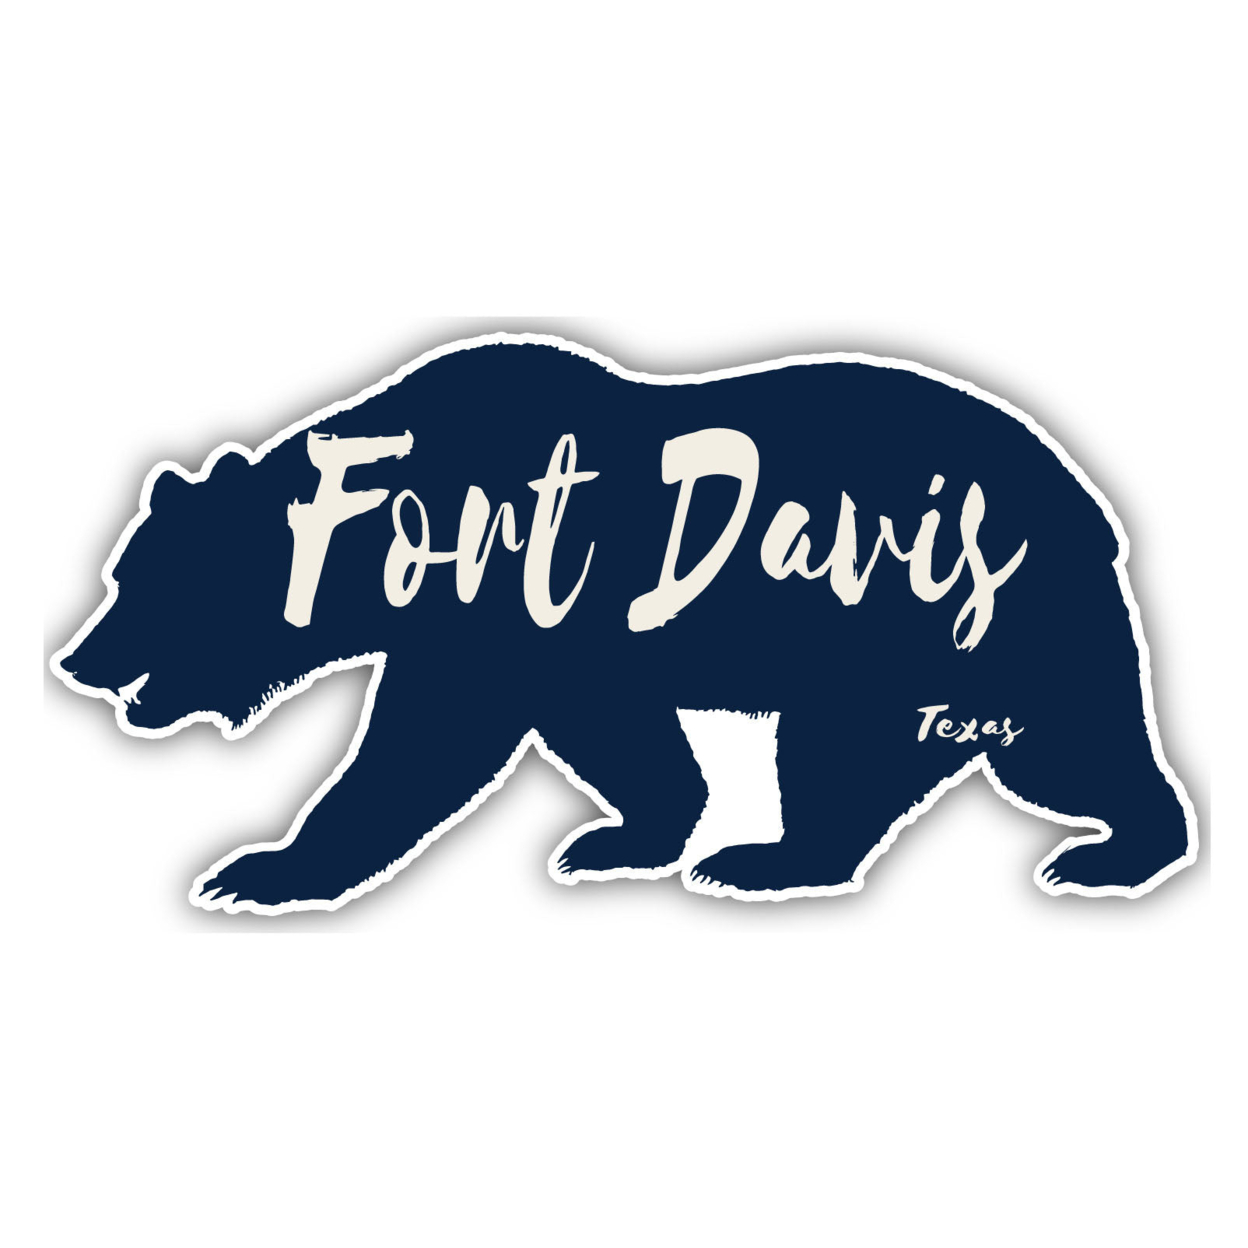 Fort Davis Texas Souvenir Decorative Stickers (Choose Theme And Size) - Single Unit, 4-Inch, Tent